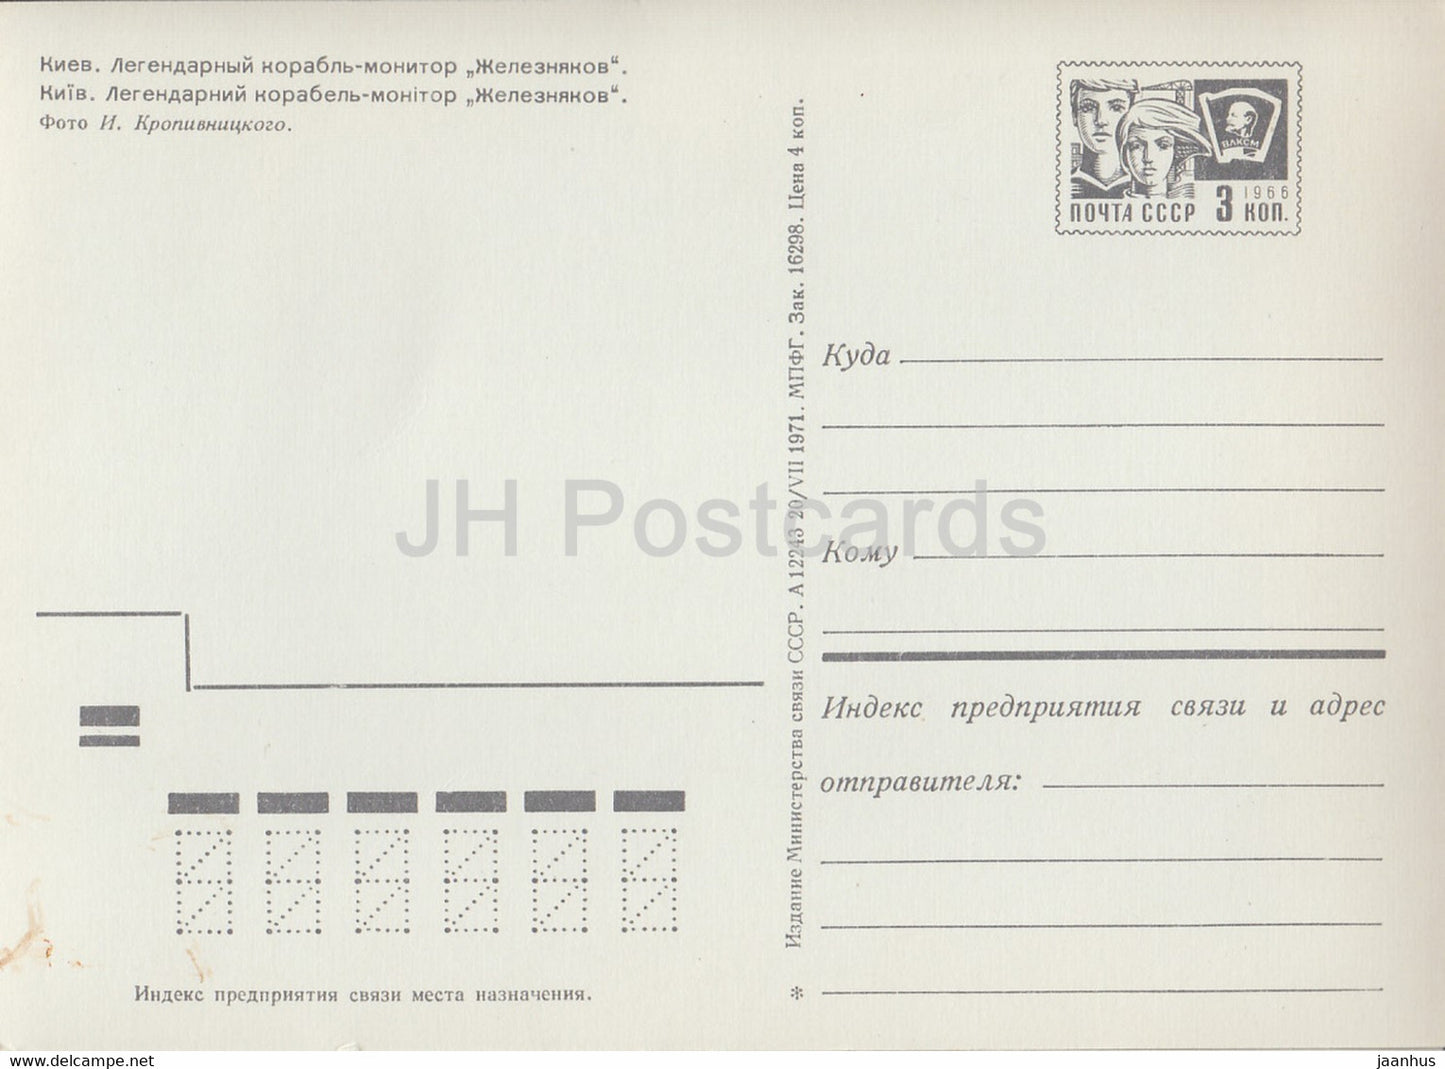 Kiev - Kiev - navire moniteur légendaire Zheleznyakov - entier postal - 1971 - Ukraine URSS - inutilisé